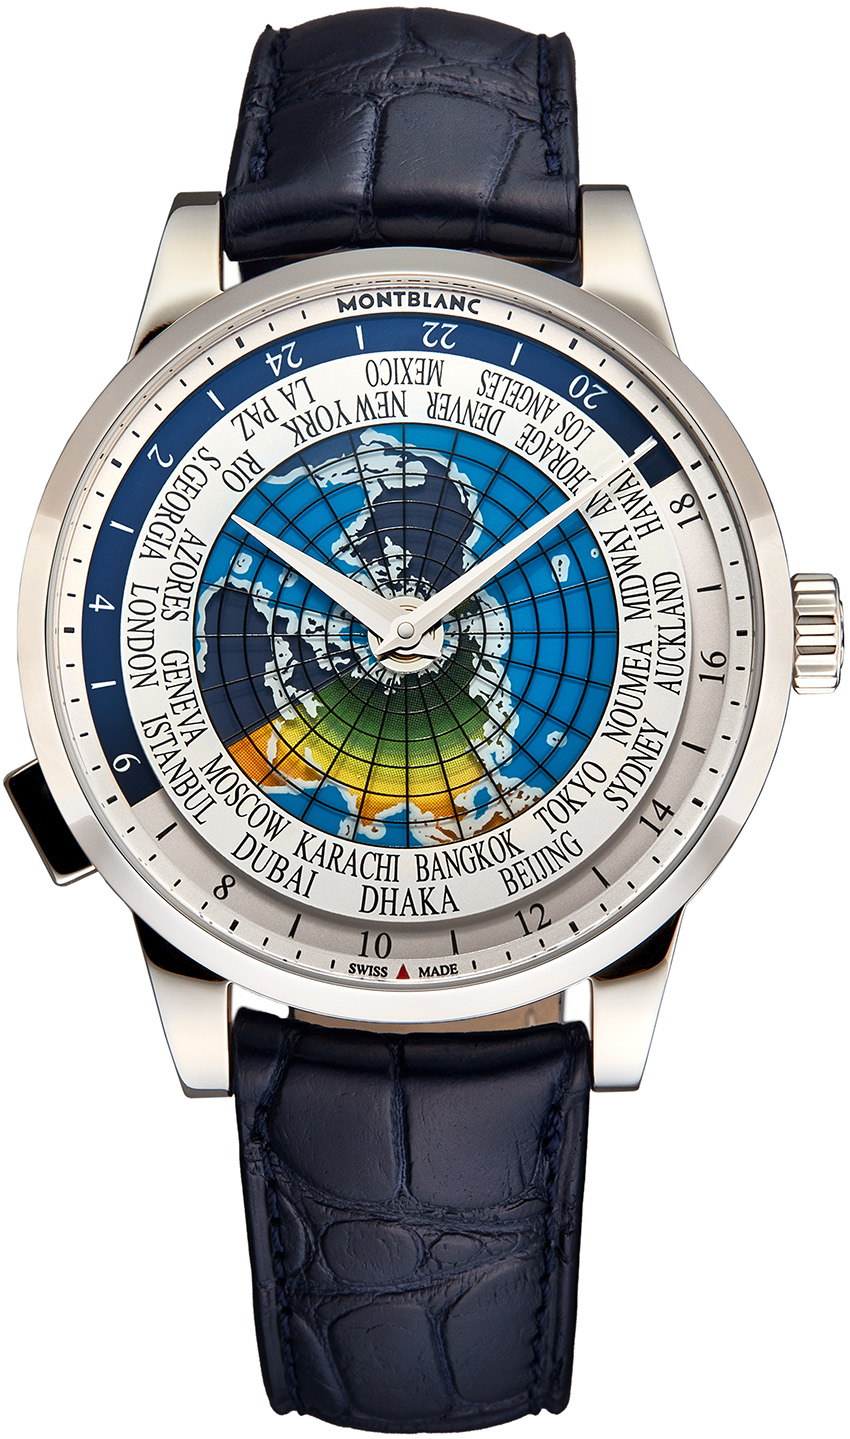 Montblanc Heritage Spirit Orbis Terrarum Men's Watch Model: 116533